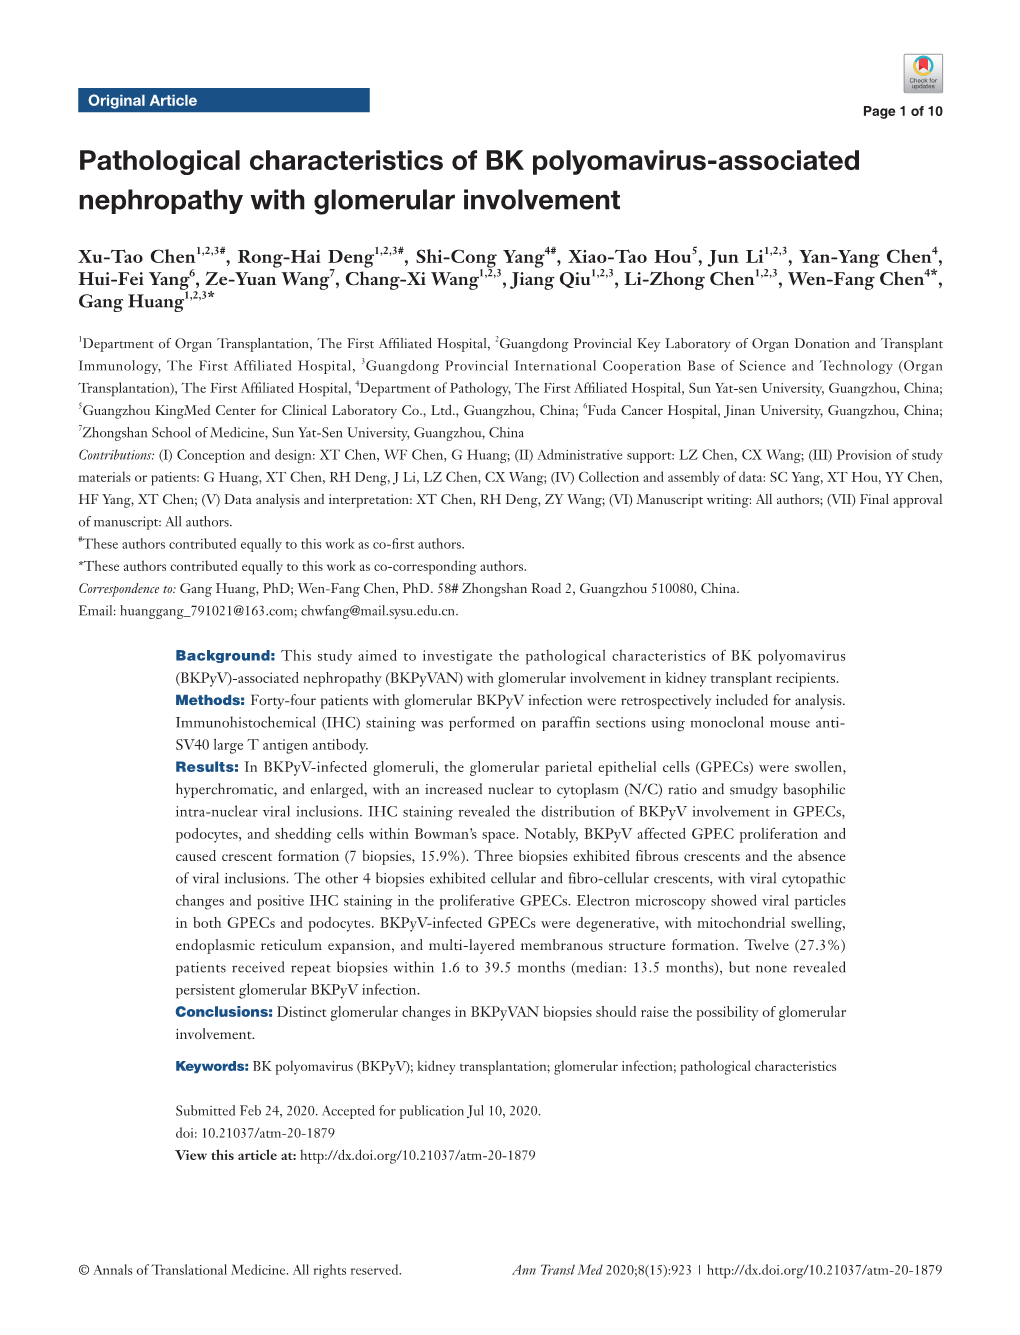 Pathological Characteristics of BK Polyomavirus-Associated Nephropathy with Glomerular Involvement